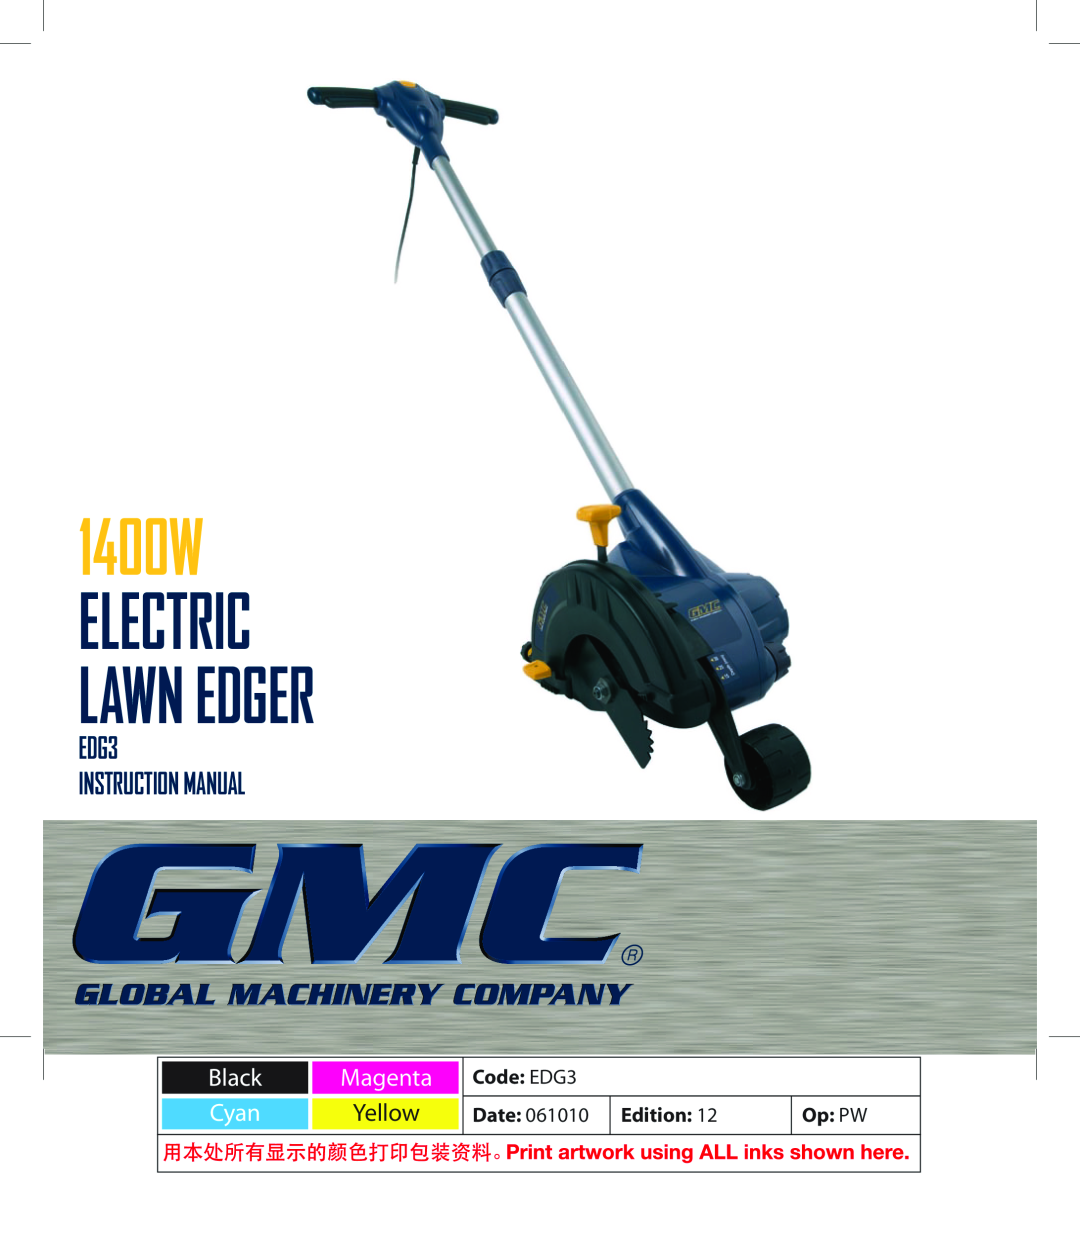 Global Machinery Company EDG3 instruction manual 1400W ELECTRIC LAWN EDGER, Black Magenta, Cyan Yellow 